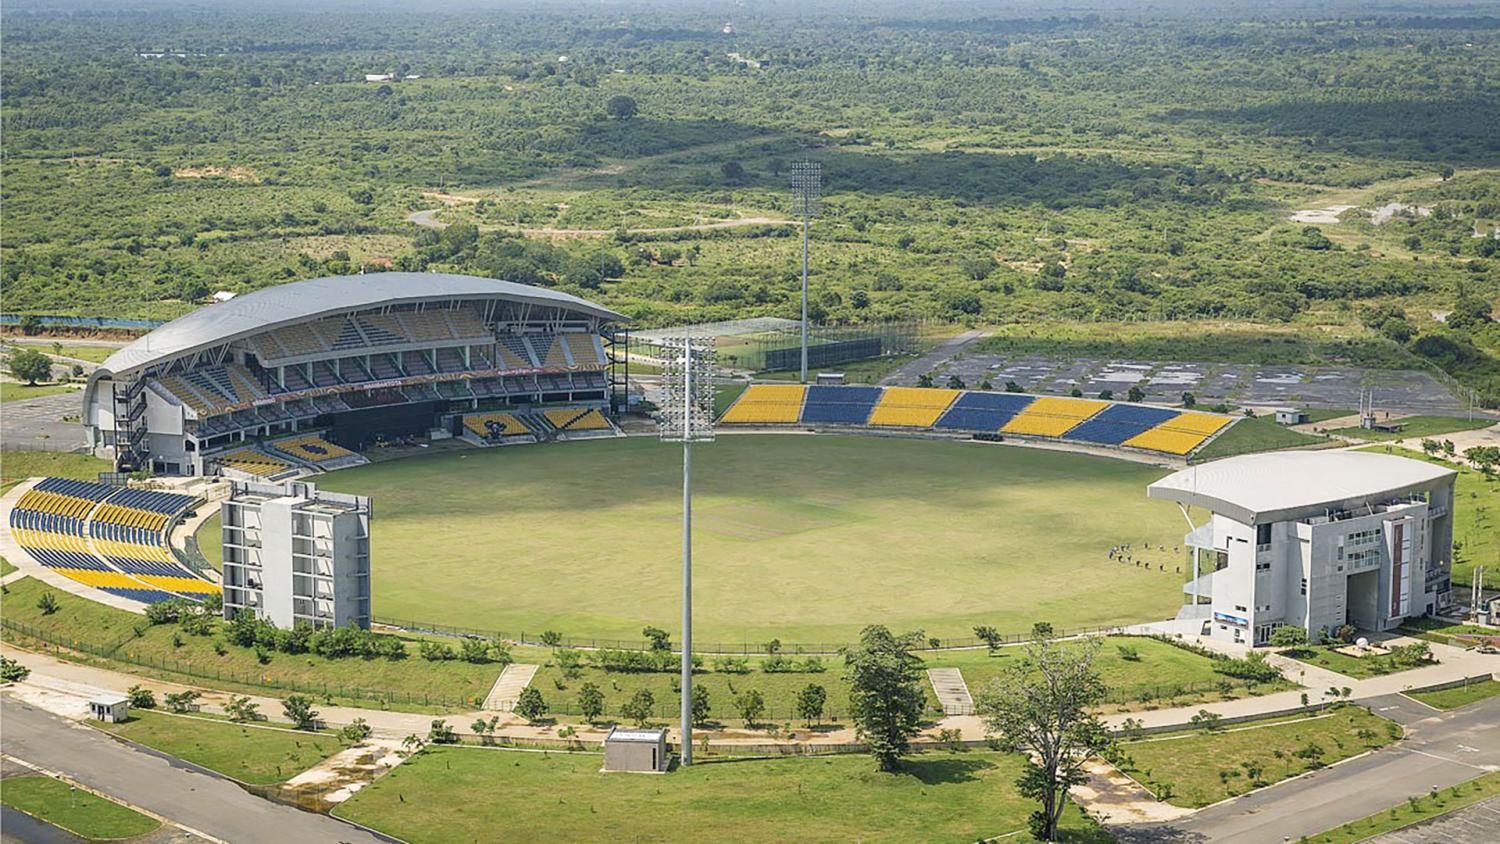 Taxi to Mahinda Rajapaksa International Cricket Stadium